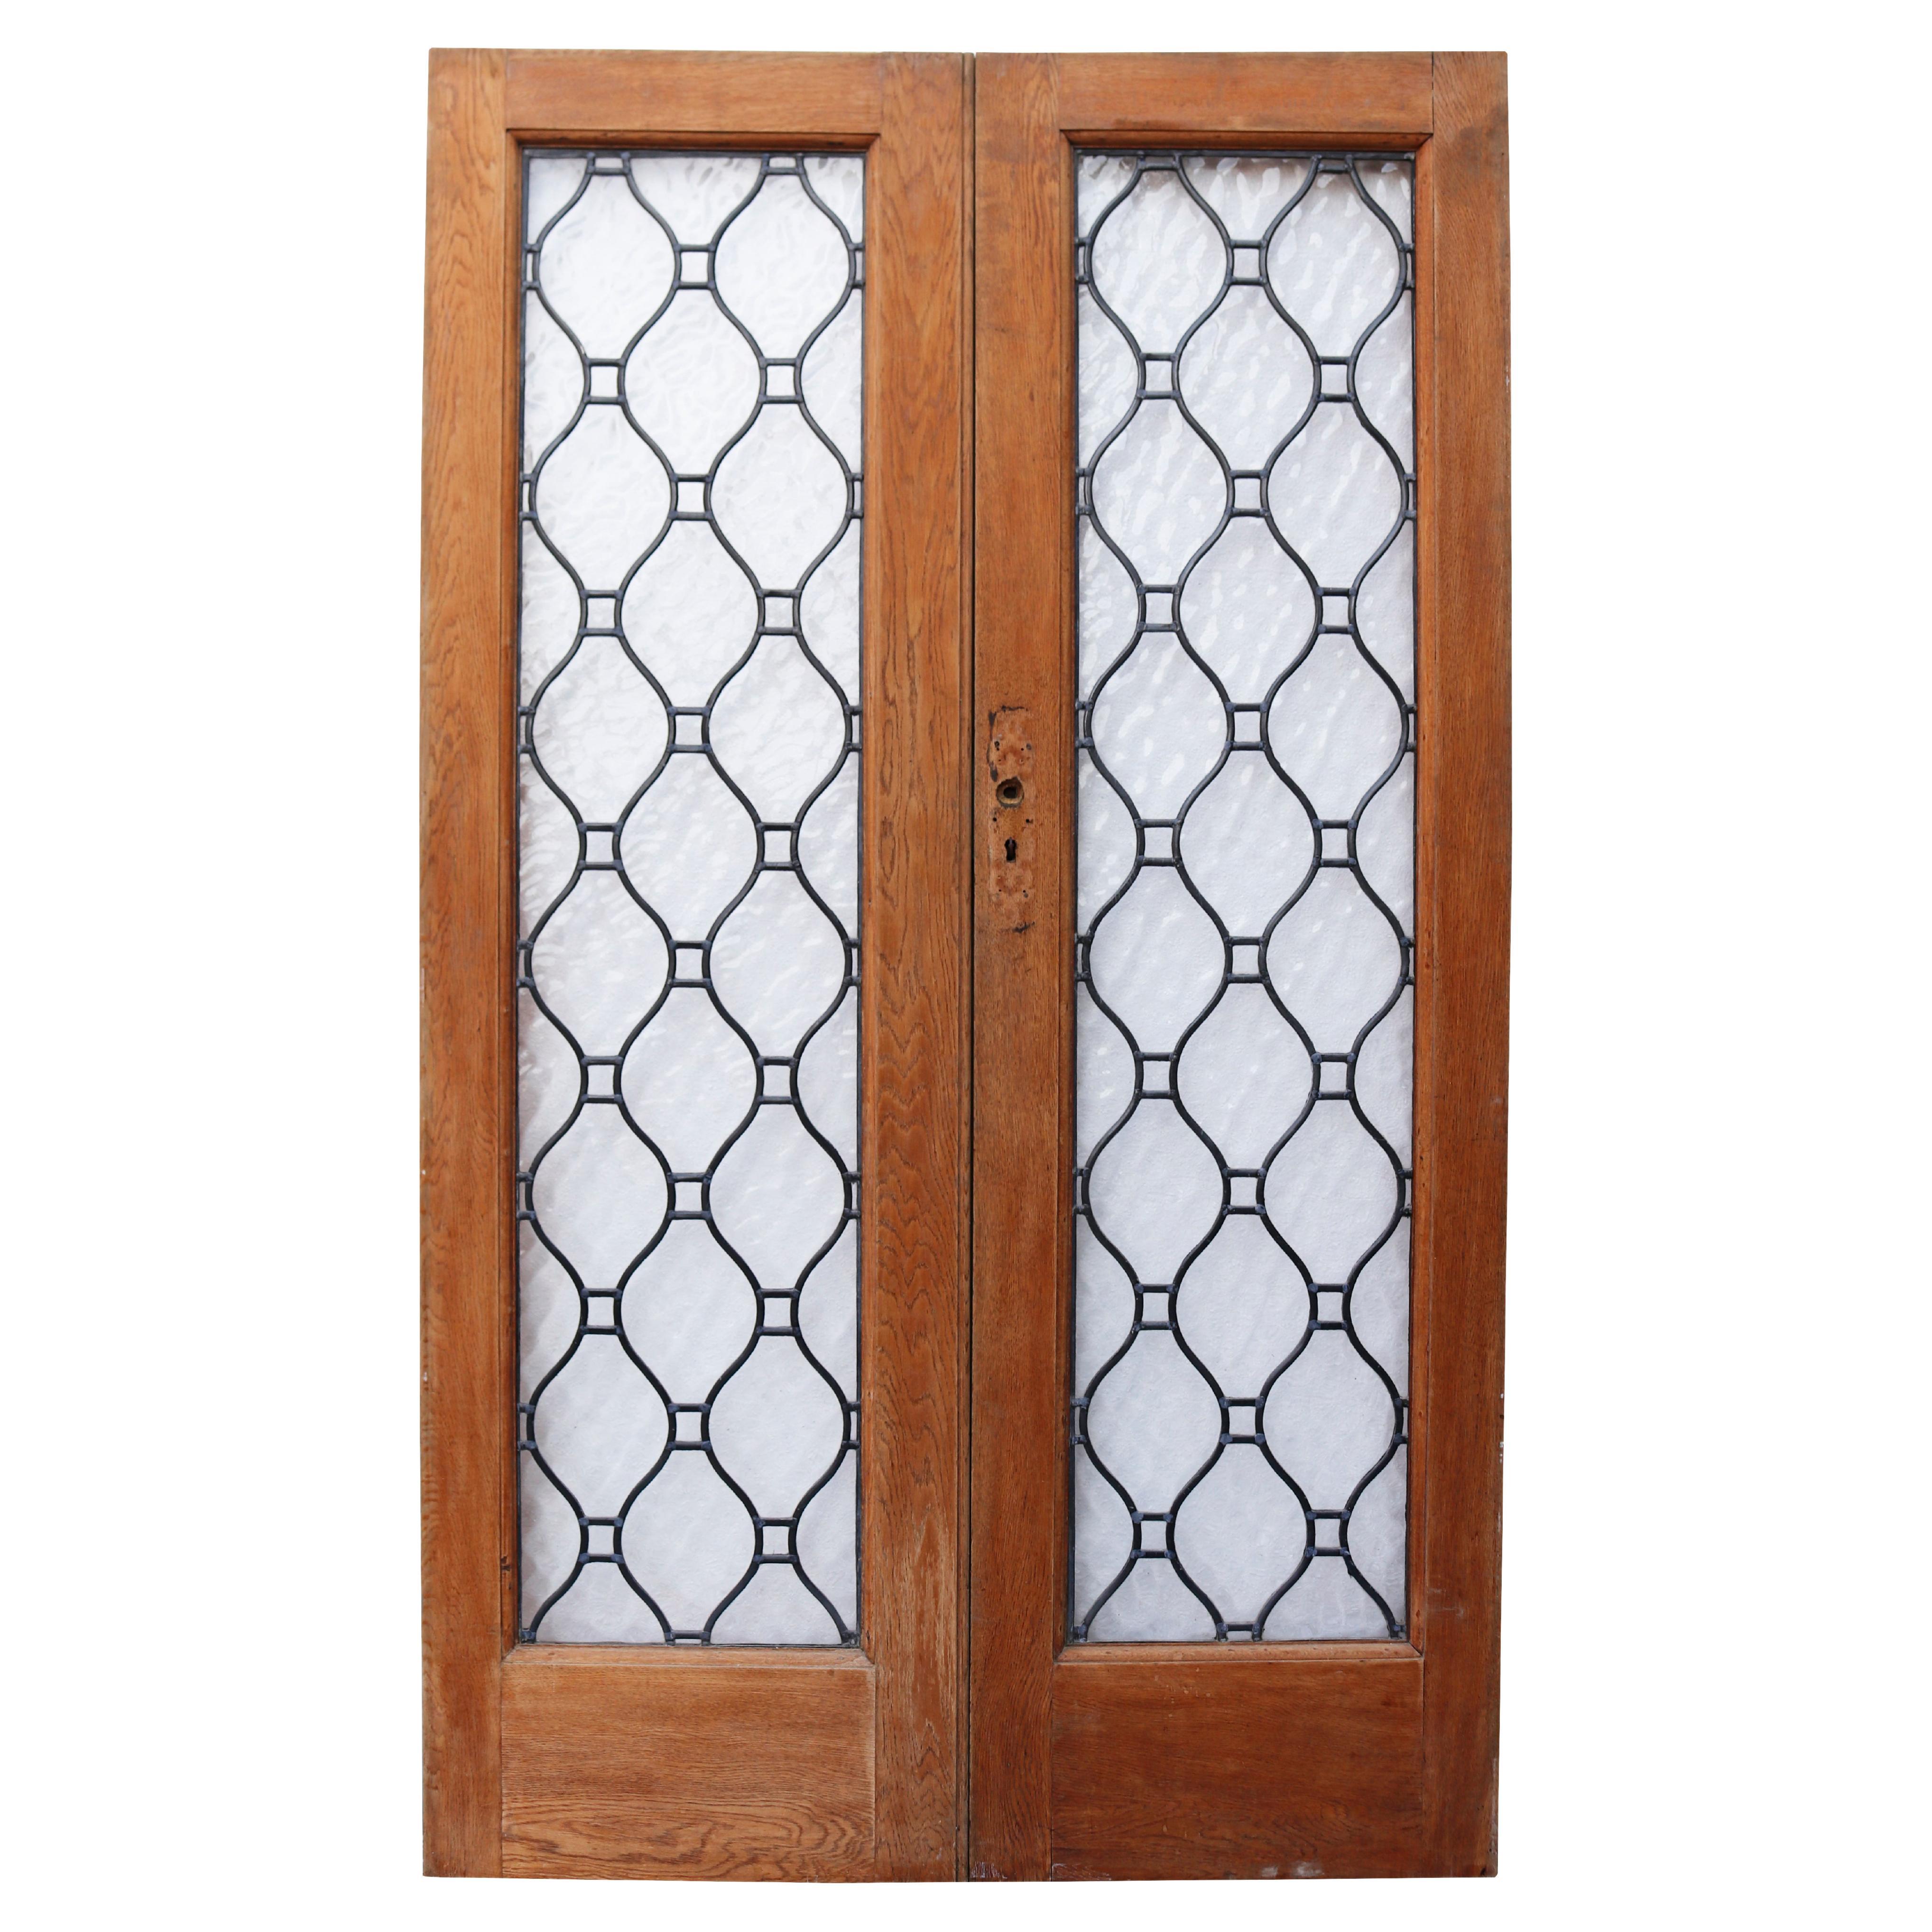 Set of Antique Glazed Oak Double Doors For Sale